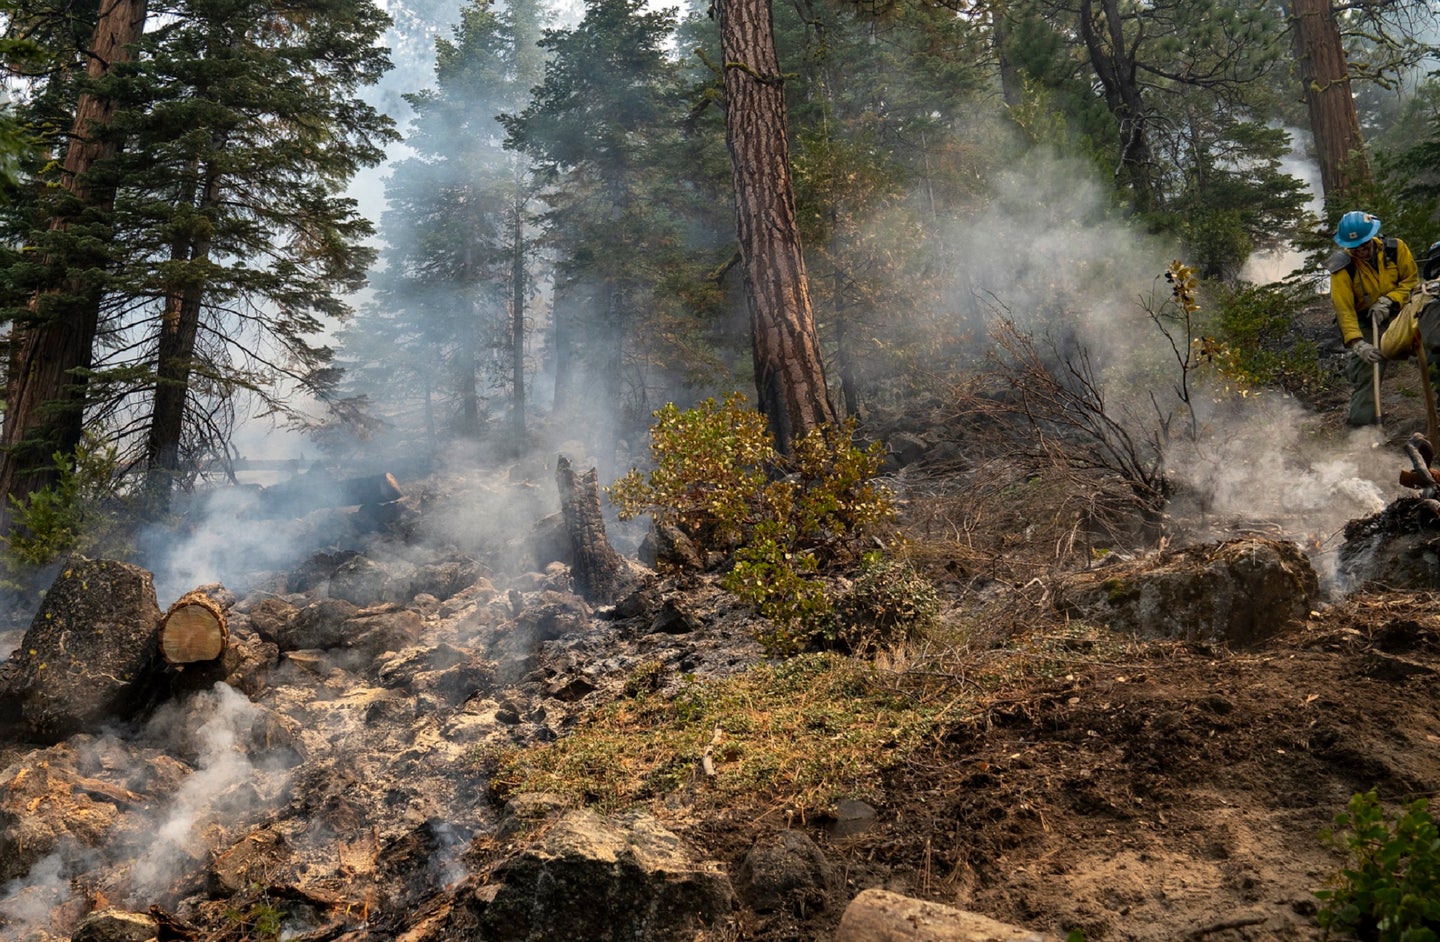 Dixie fire burn scars on trees in Lassen National Park in California